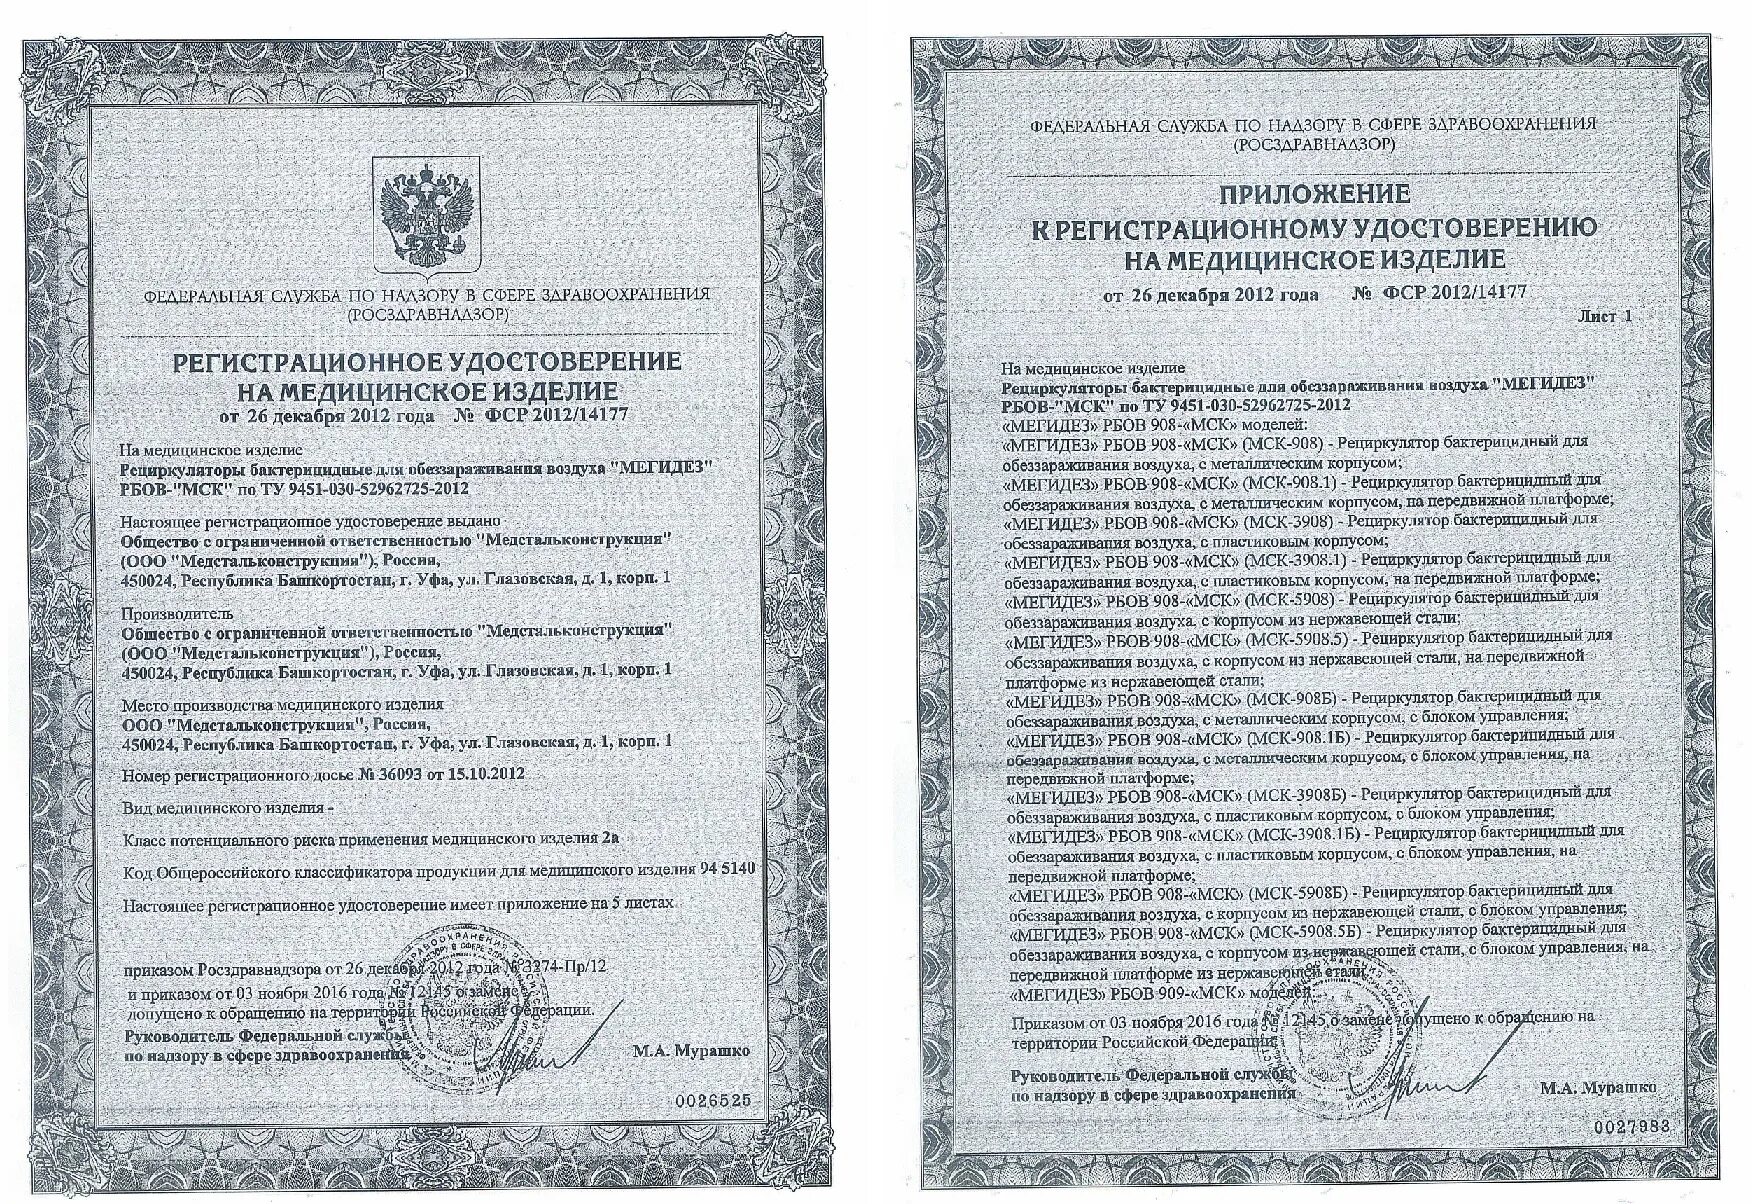 Https roszdravnadzor ru services licenses. Облучатель-рециркулятор мегидез РБОВ 910-МСК (МСК-910.1). Облучатель-рециркулятор мегидез РБОВ 908-МСК (МСК-908.1).